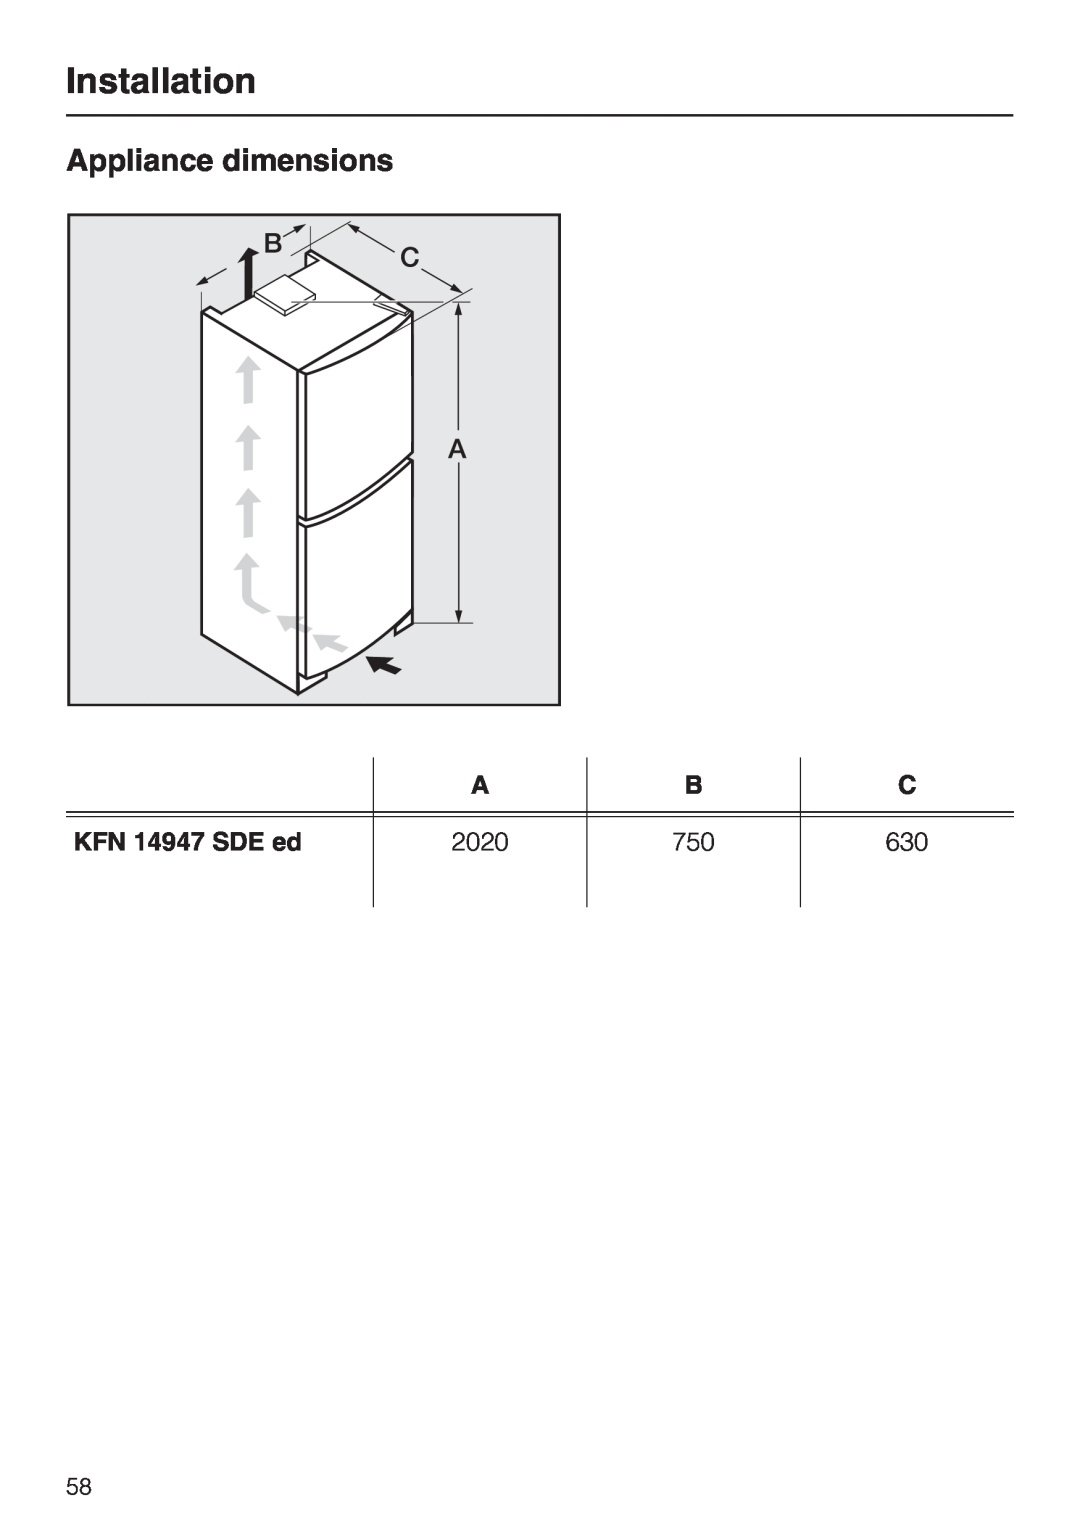 Miele KFN 14947 SDE ED installation instructions Appliance dimensions, KFN 14947 SDE ed, Installation 